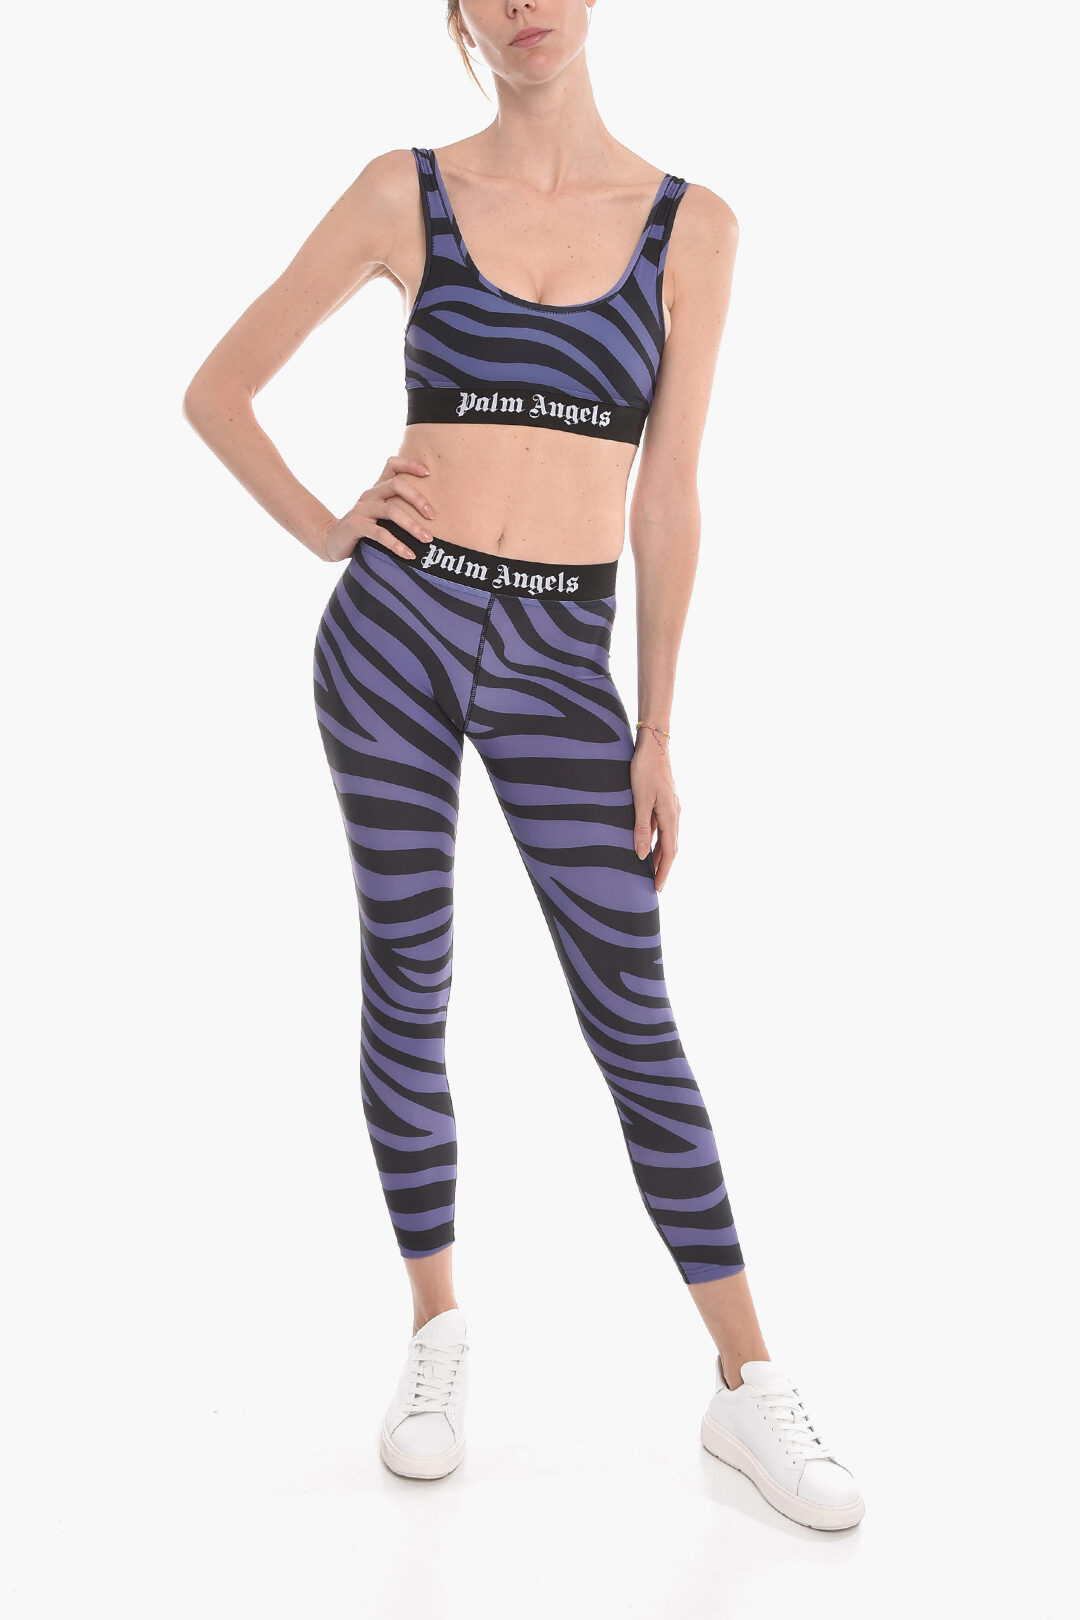 Palm Angels Zebra-printed Leggings with Logoed Elastic Waistband women - Glamood  Outlet